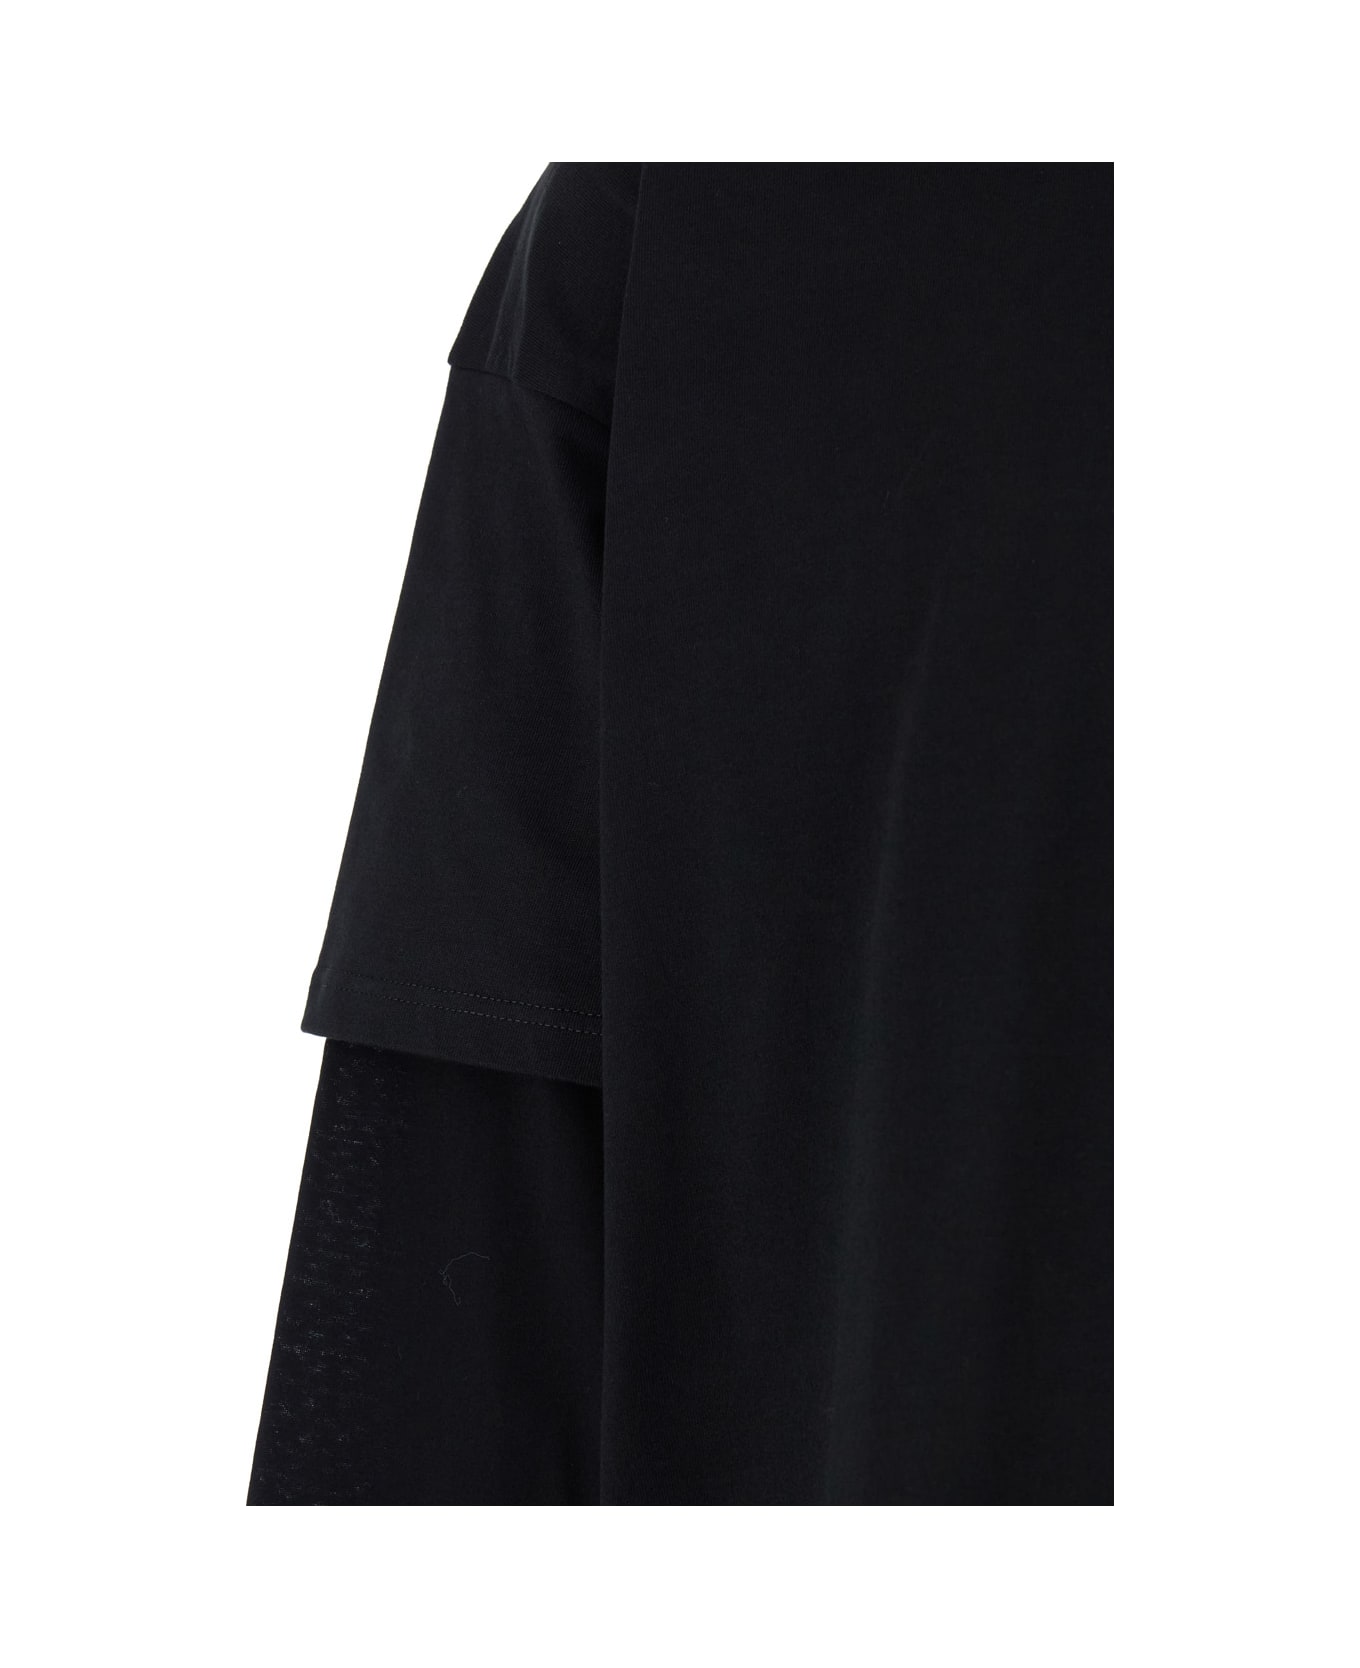 Jil Sander Black Sweater Double-layers In Techno Fabric Man - Black